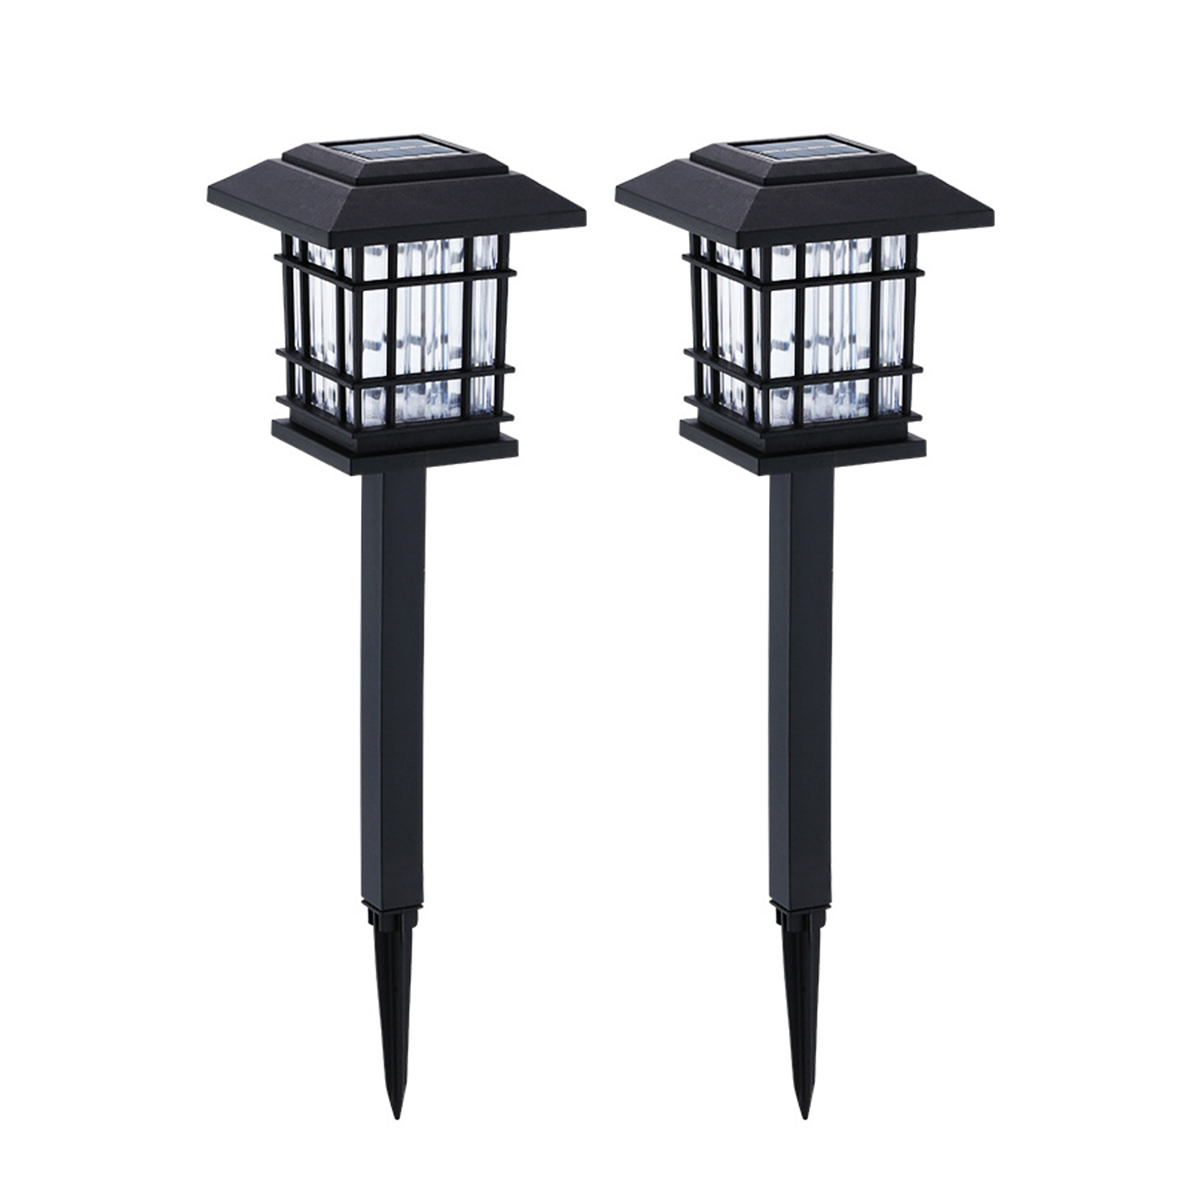 2PCS-Auto-Sensing-LED-Solar-Lamp-Garden-Lamps-For-Outdoor-Patio-Lawn-1755204-10